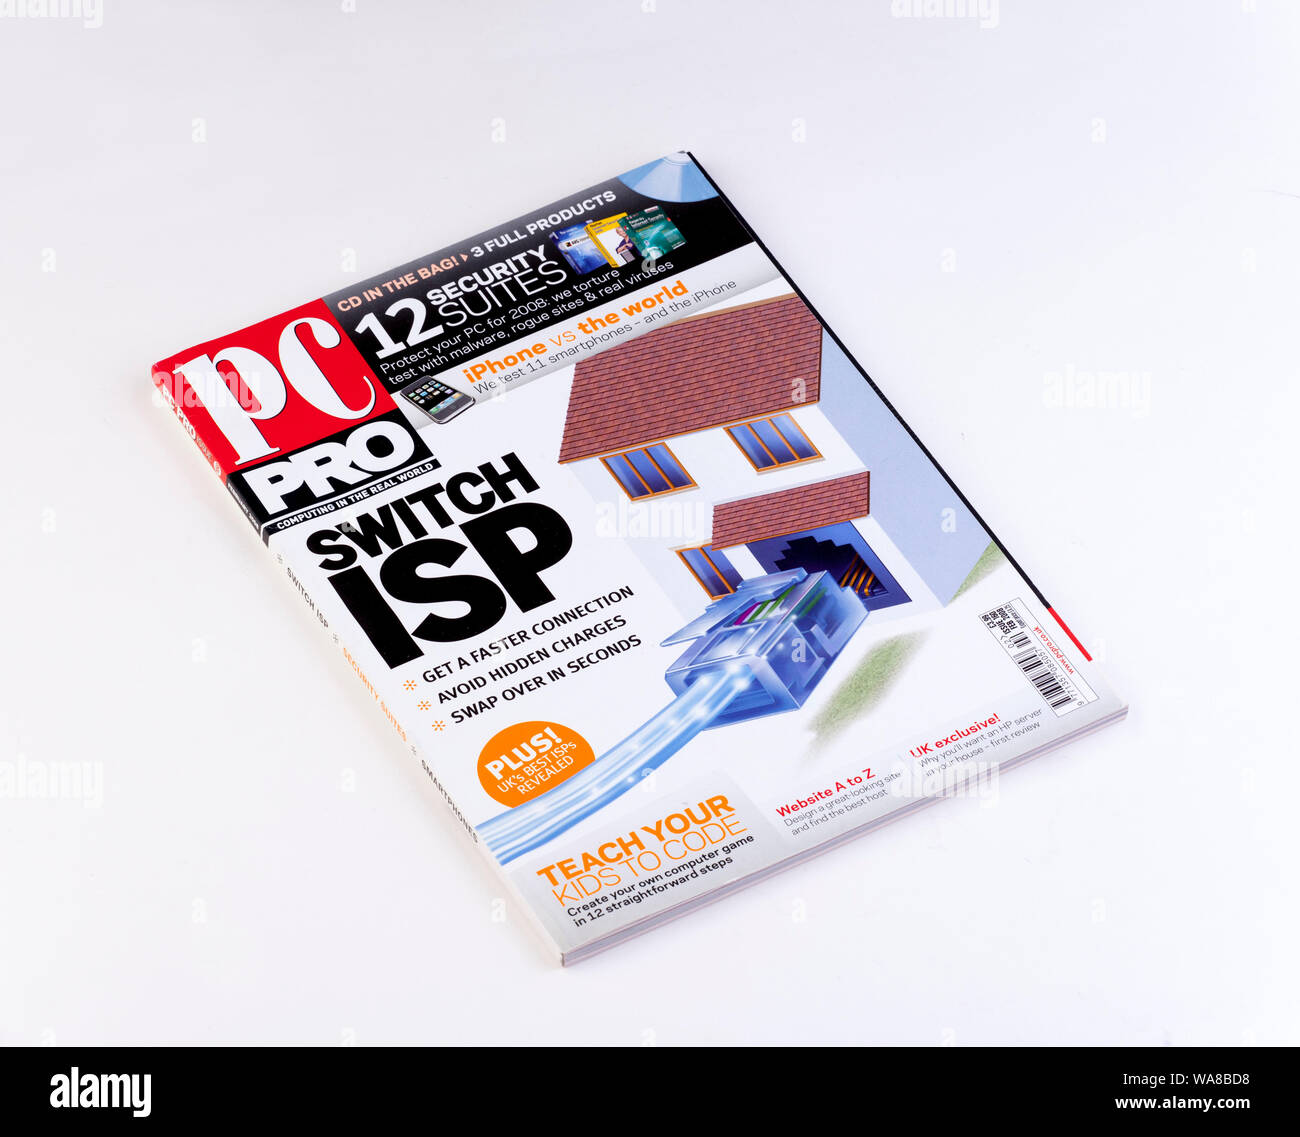 PC Pro computer magazine Stock Photo